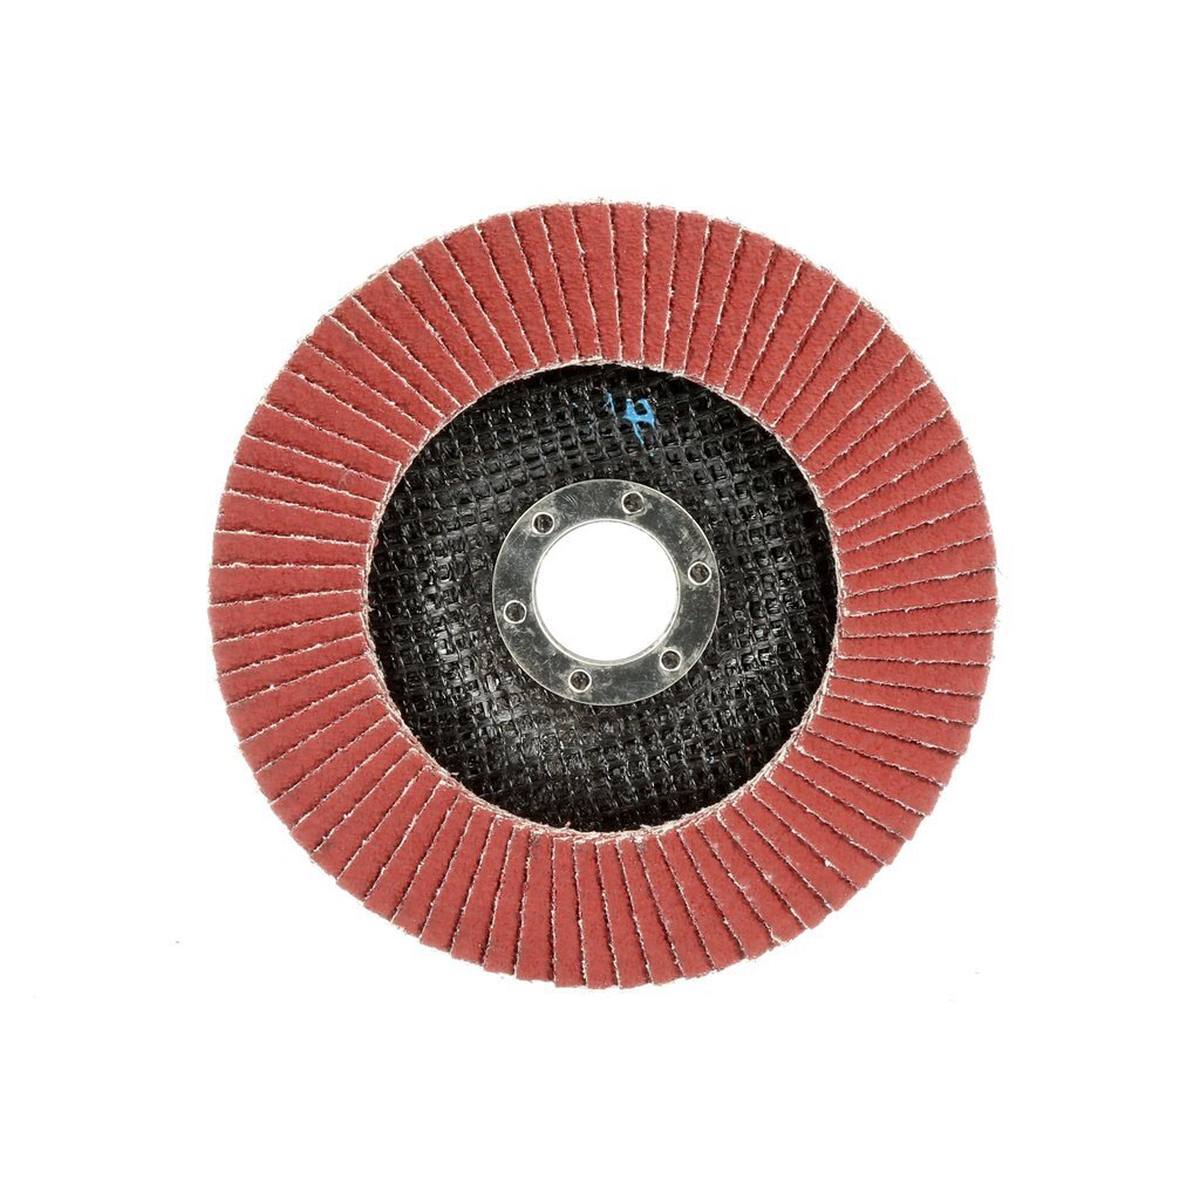 3M 969F Cubitron II flap discs d=115mm P40 #51465 conical